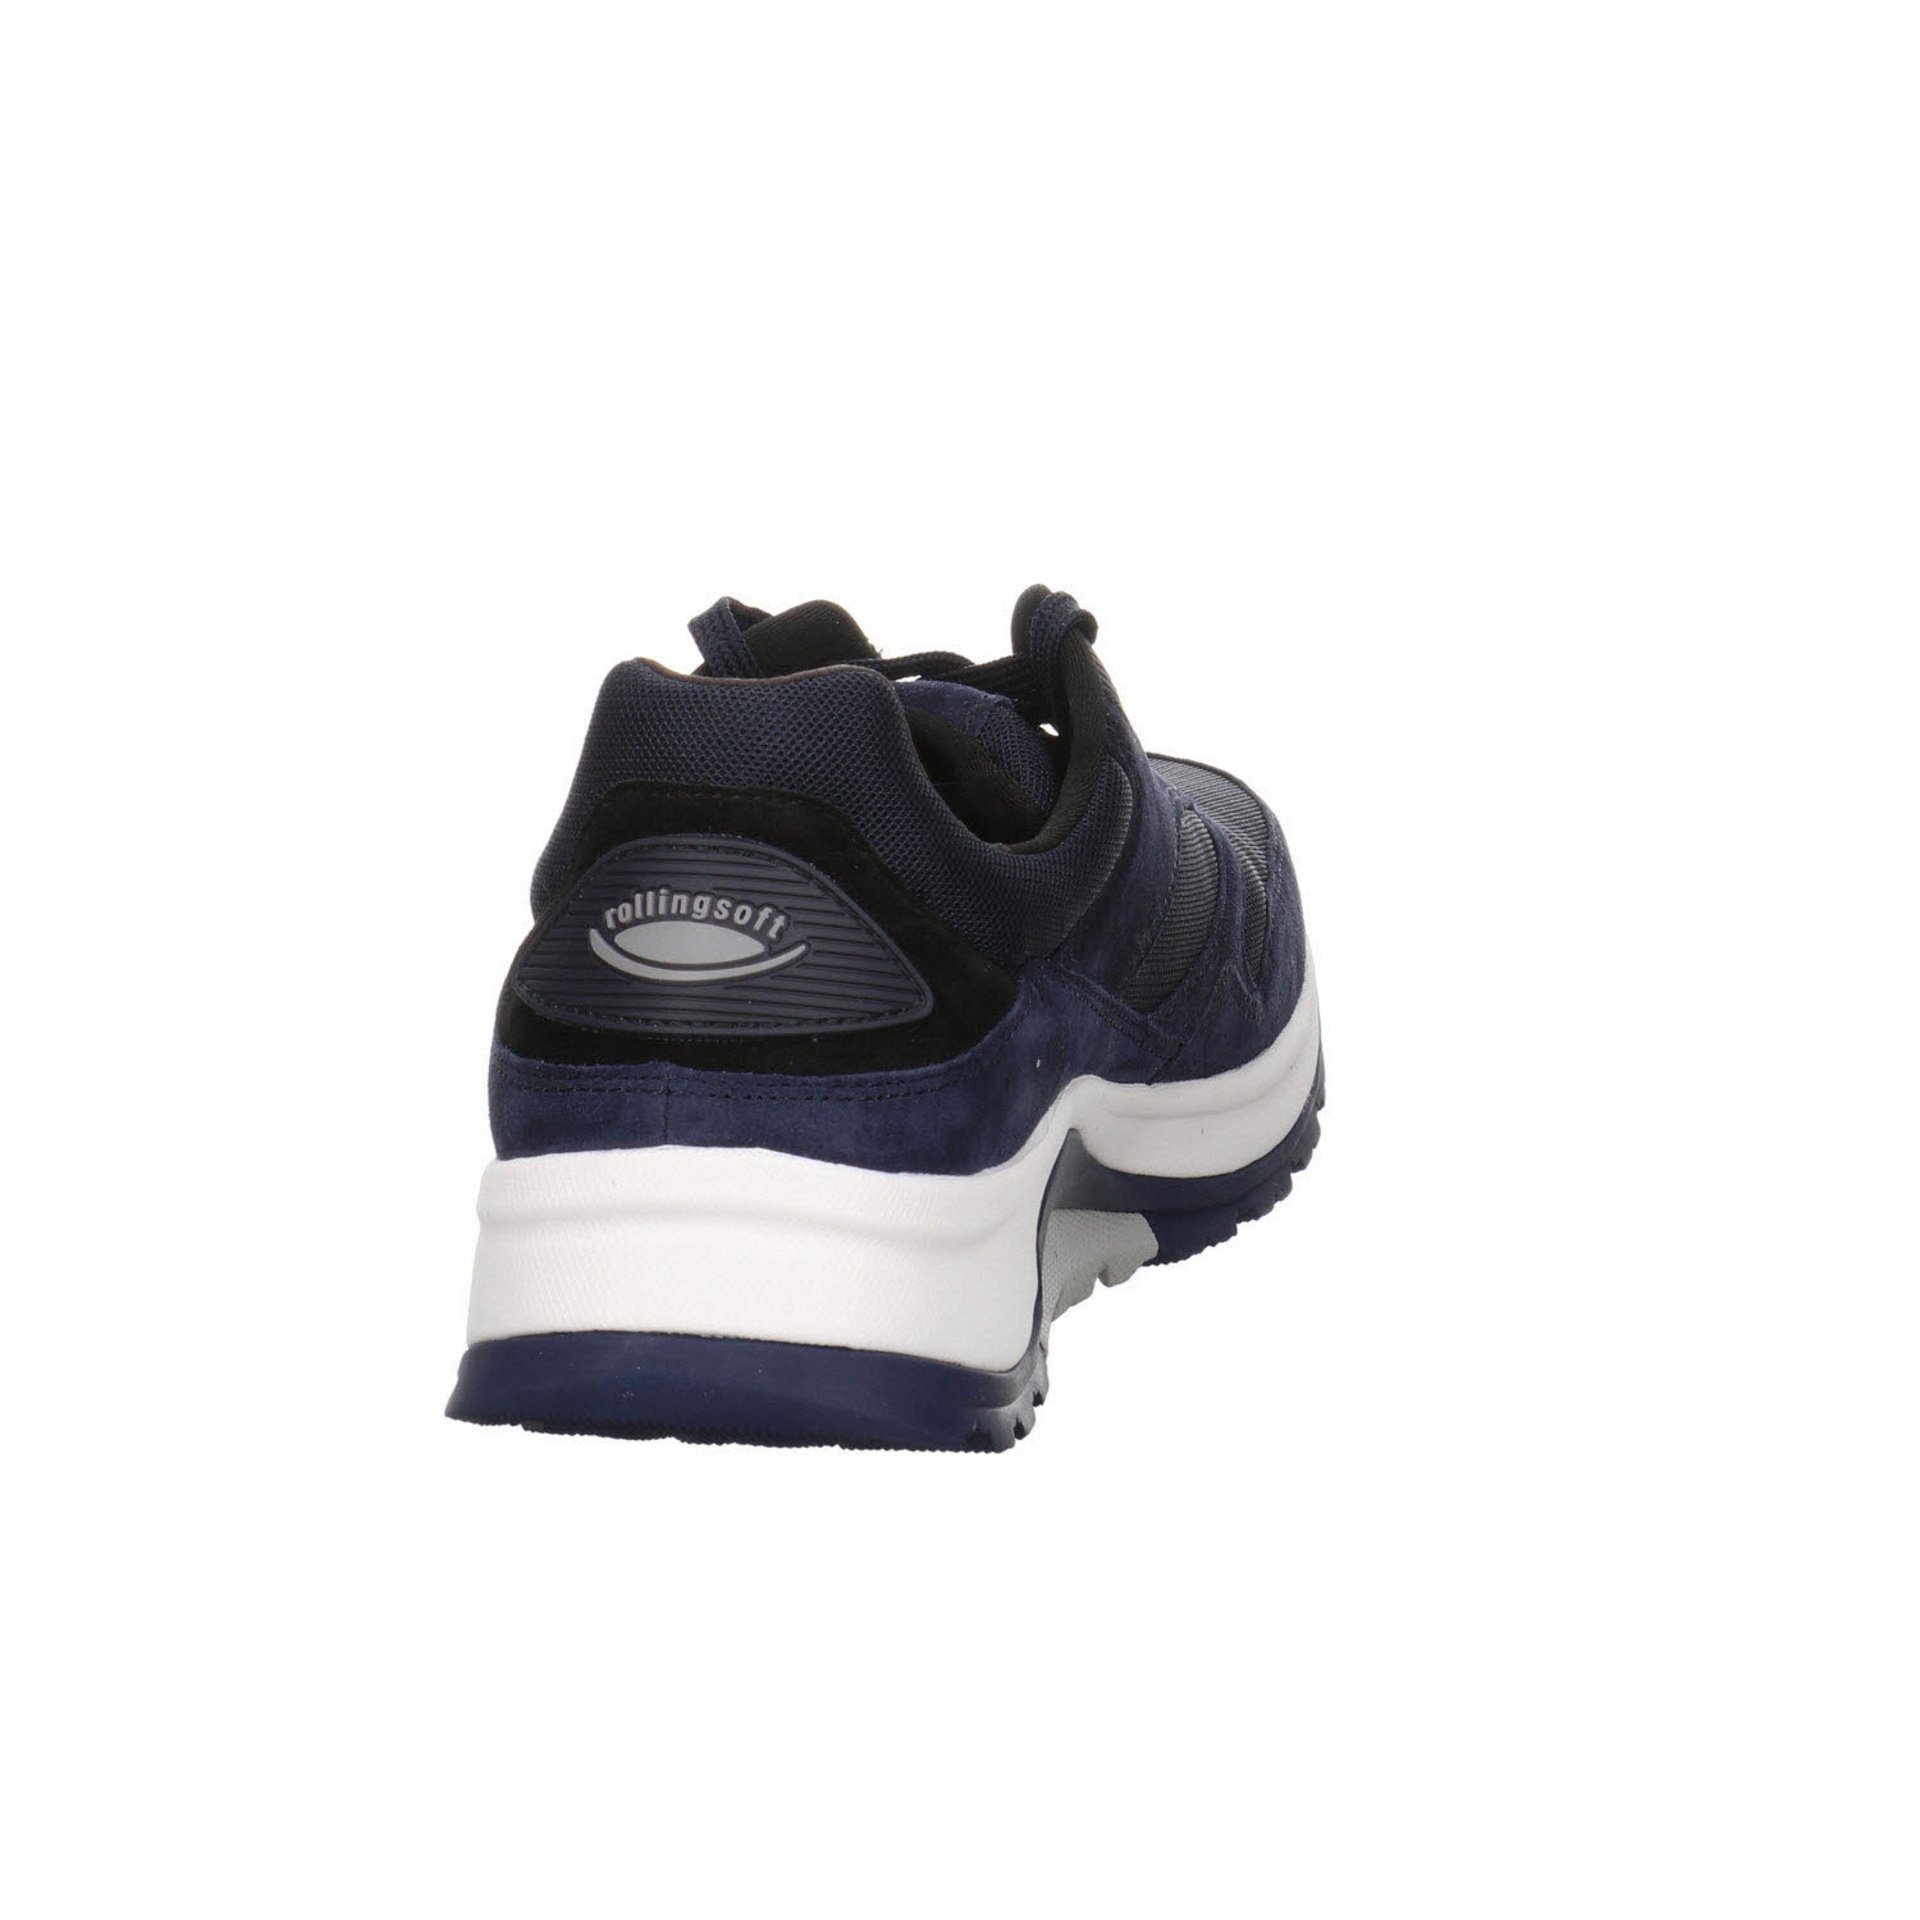 Pius Gabor Herren Sneaker blau Schnürschuh Rollingsoft dunkel Leder-/Textilkombination Sneaker Schuhe